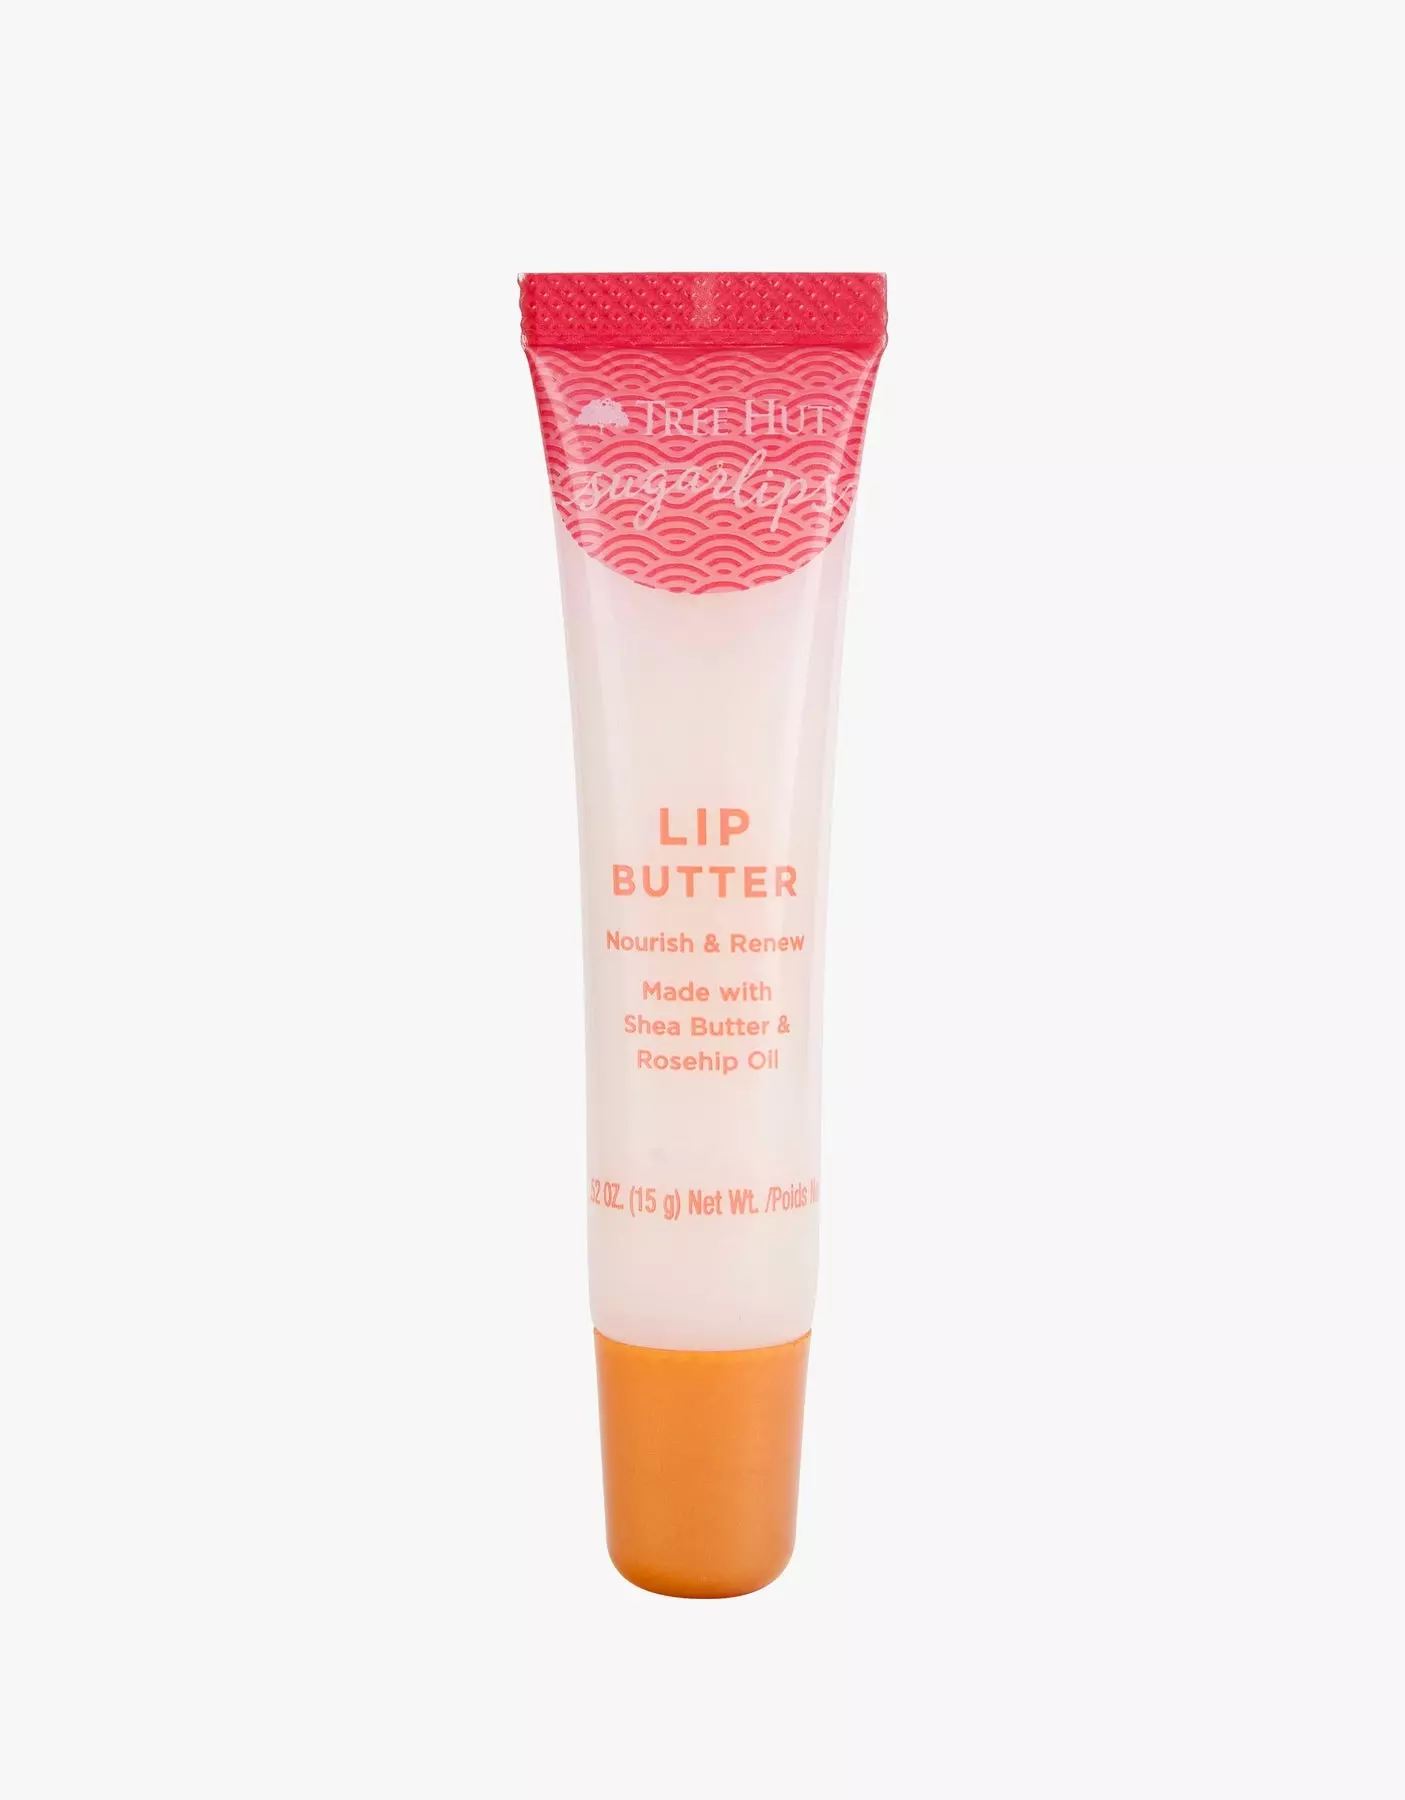 Tree Hut Sugarlips Lip Butter.52 oz, Ultra Hydrating Lip Balm for Nourishing Essential Lip Care